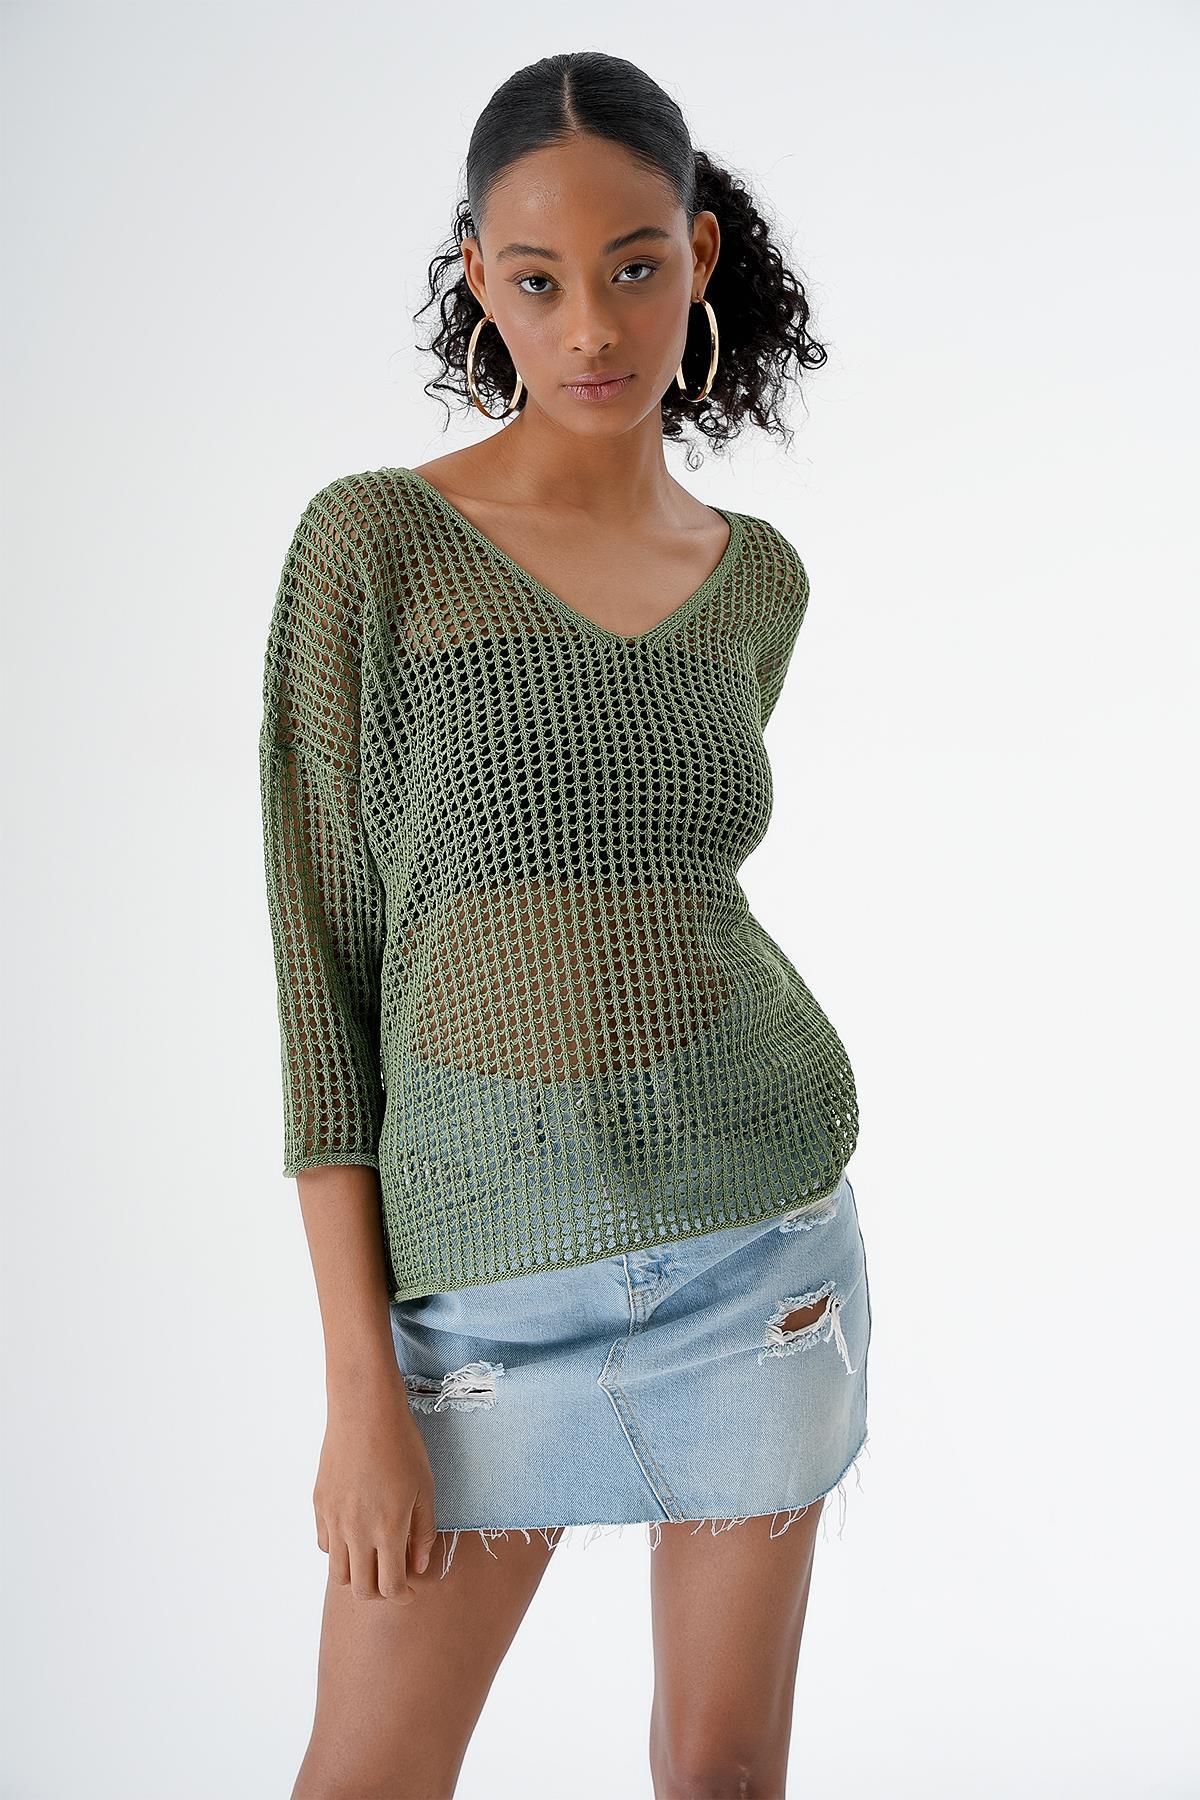 CHUBA Kadın V Yaka Ajurlu Transparan Triko Bluz  Yeşil 24S154